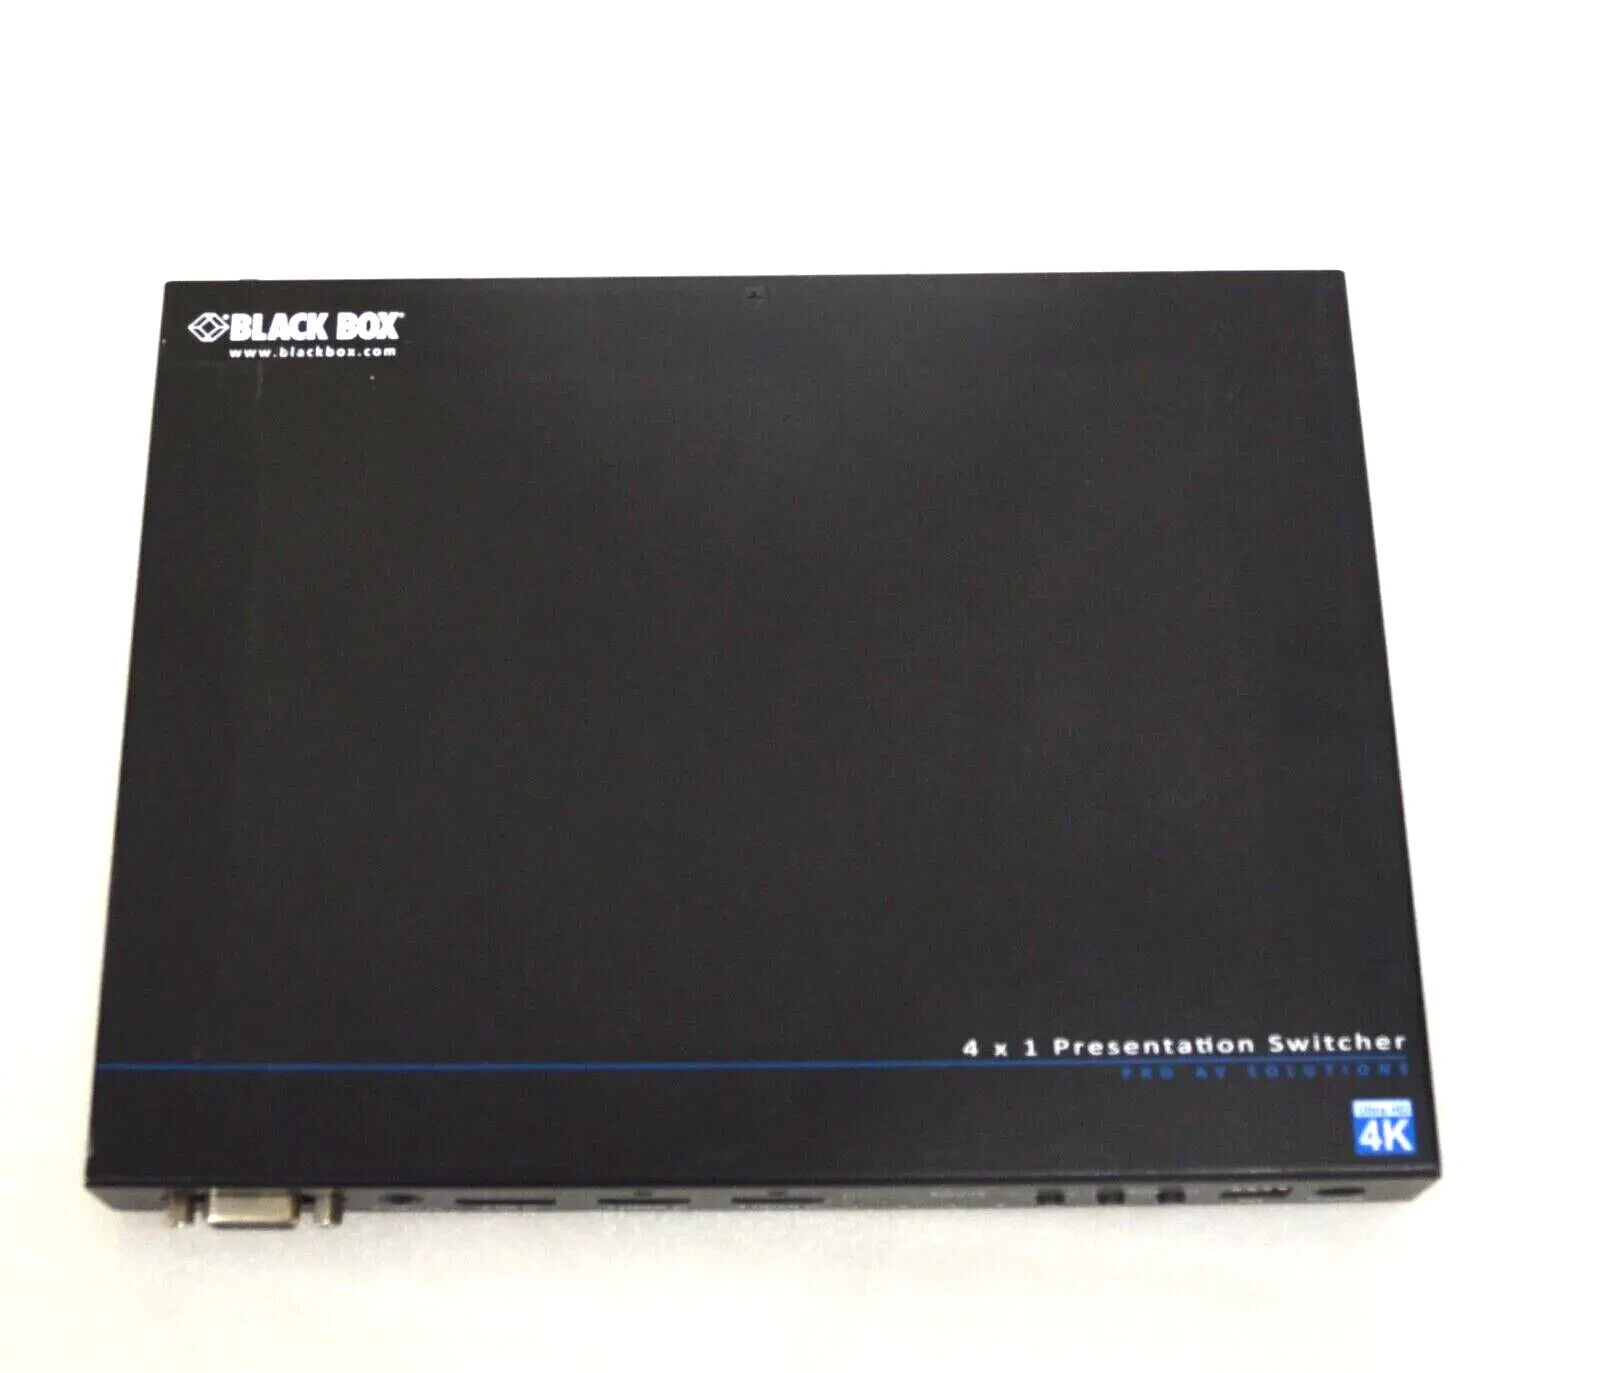 AVSC-0401H Black Box 4K HDMI DisplayPort VGA HDBaseT 4 x 1 Presentation Switcher